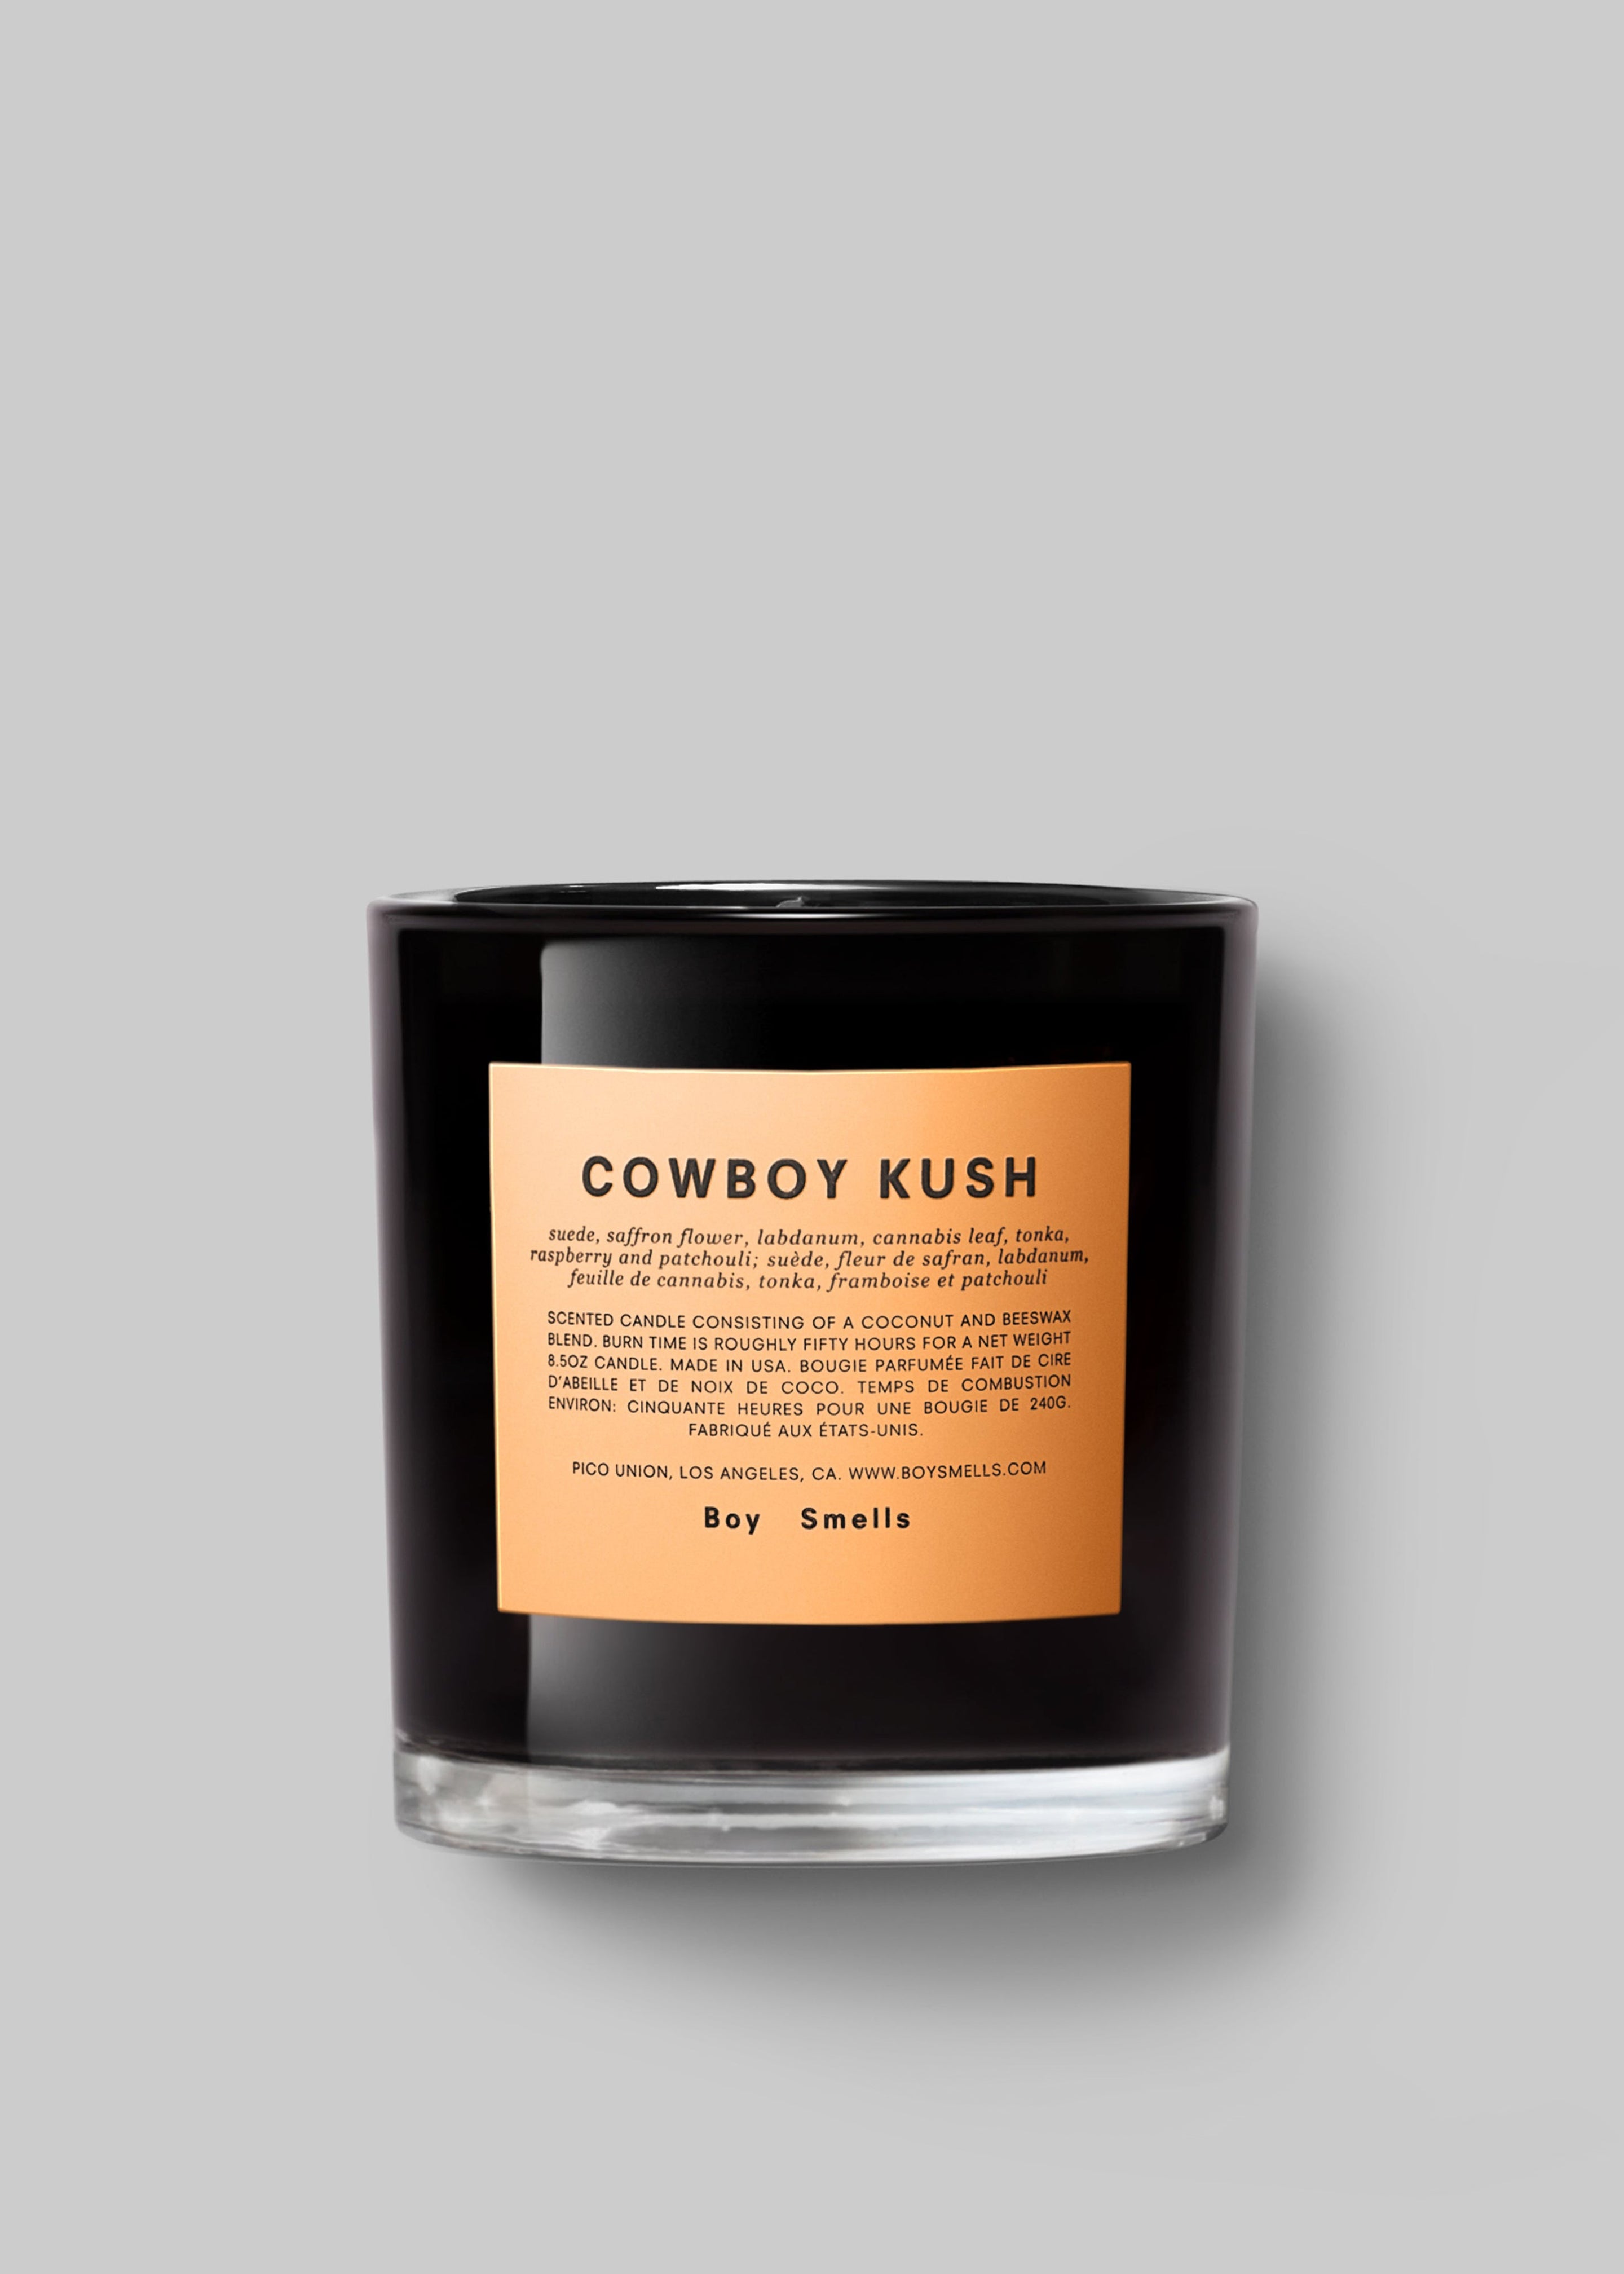 Boy Smells Cowboy Kush Candle - 1